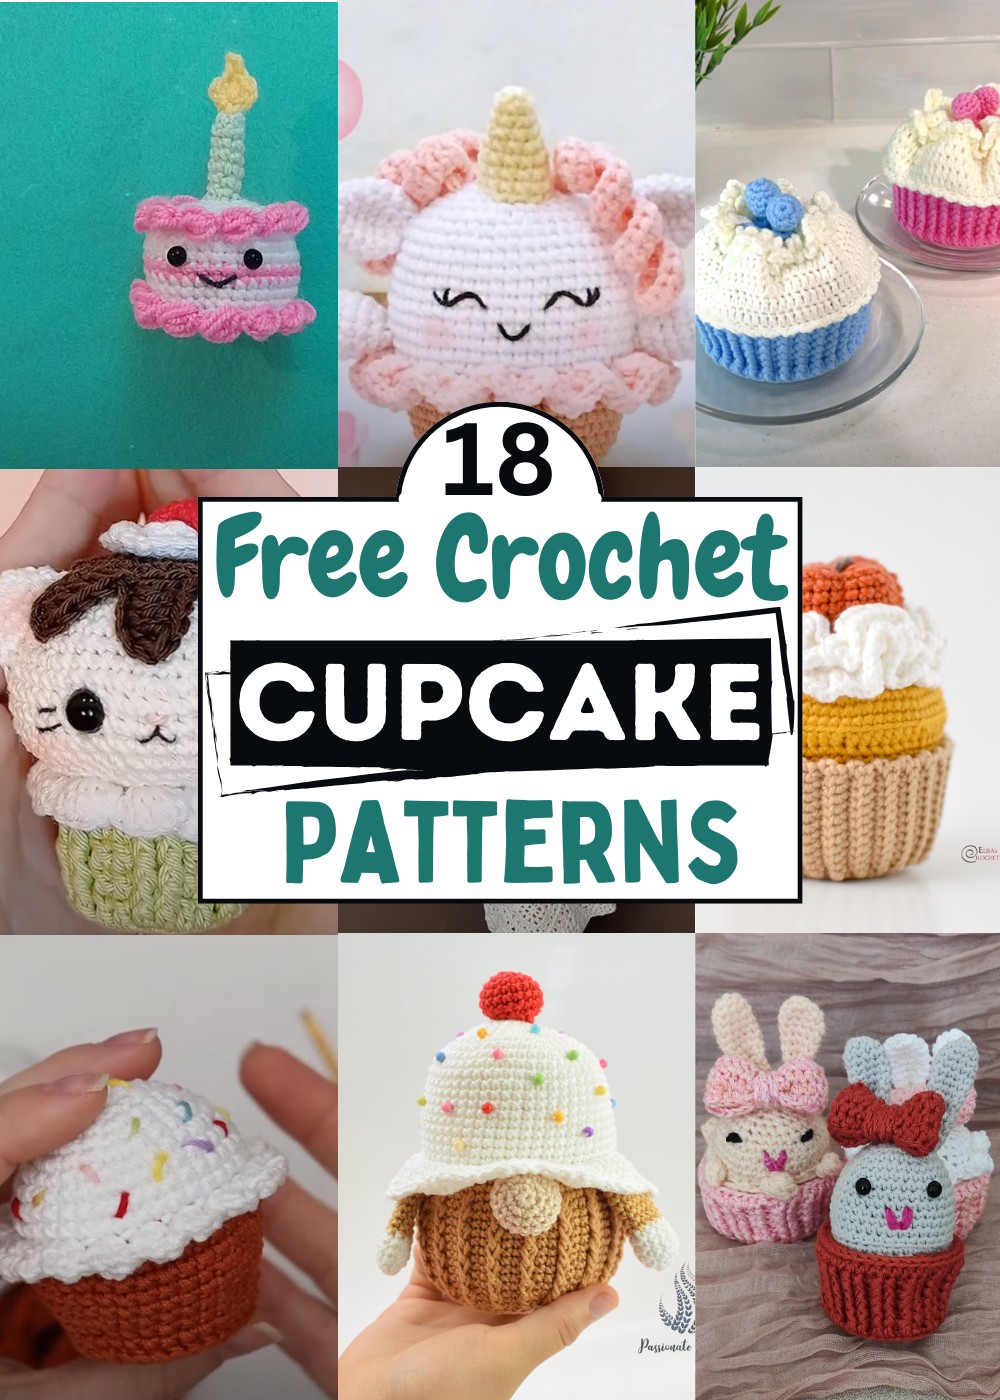 Free Crochet Cupcake Patterns